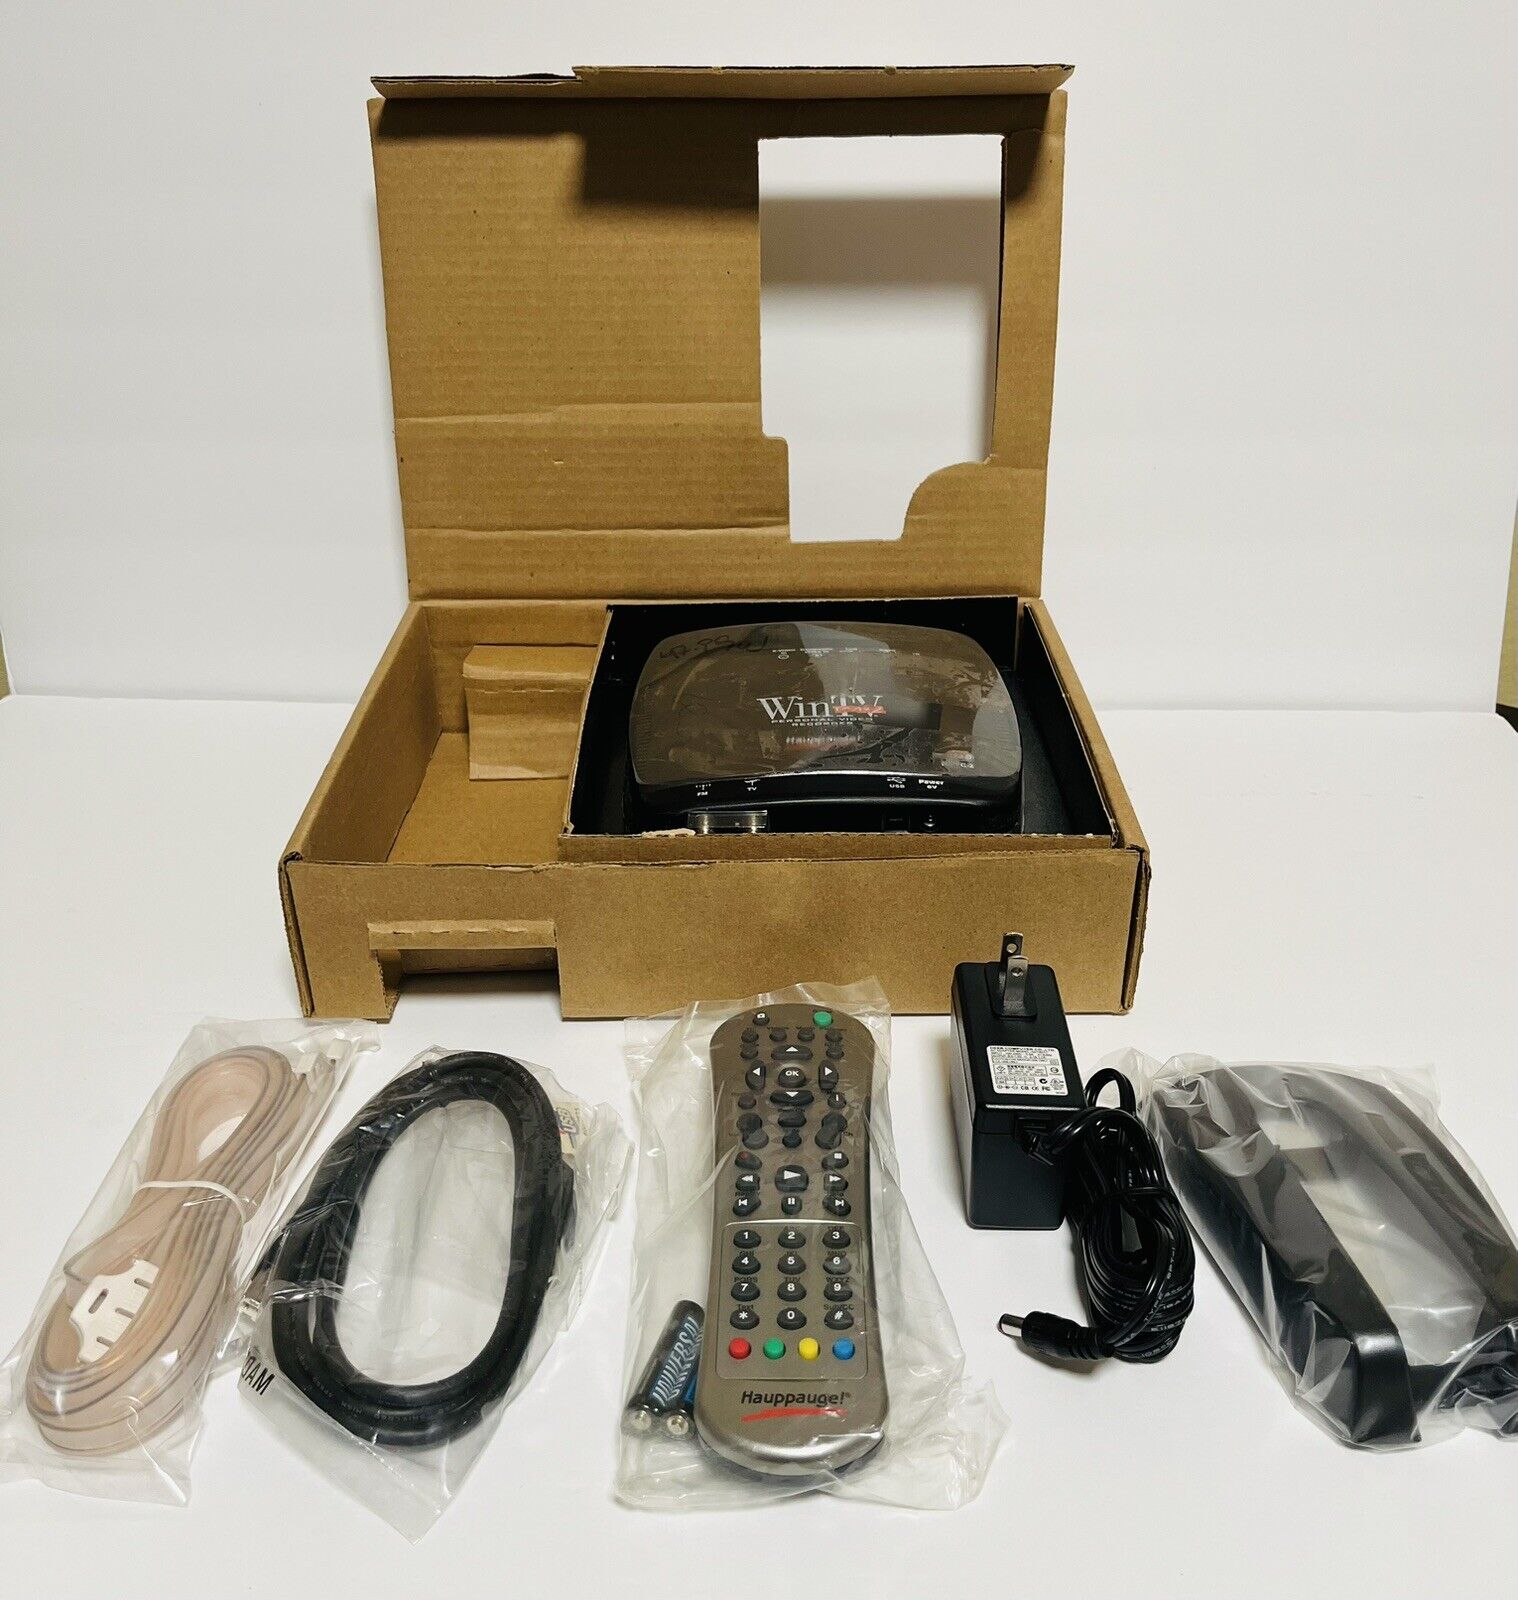 Hauppauge WinTV-PVR MCE Edition USB2 Personal Video Recorder New Open Box